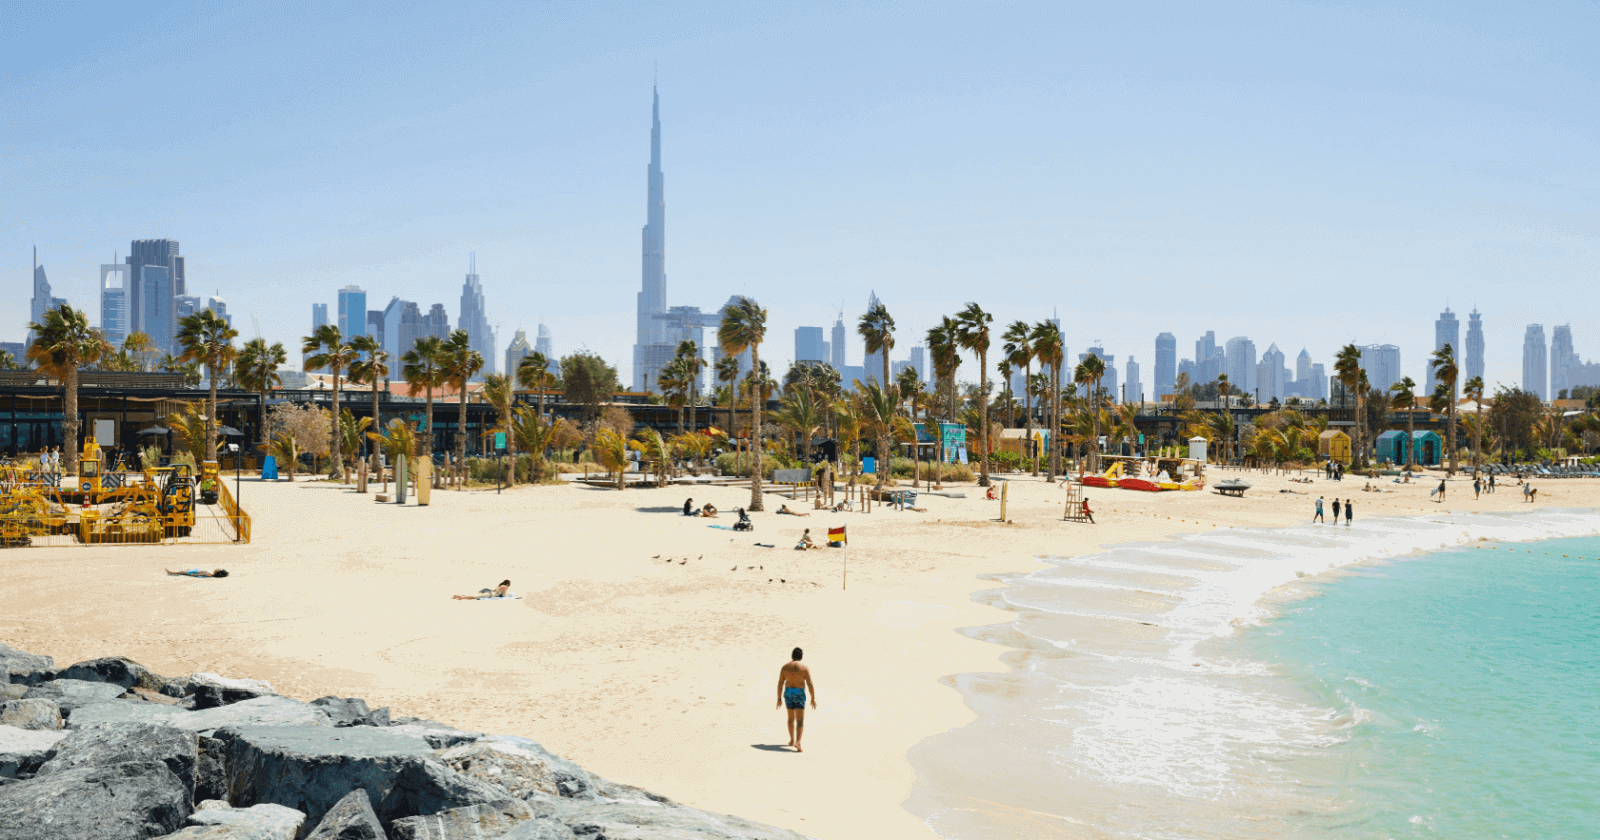 Beaches in Dubai: Explore Dubai Like Never Before